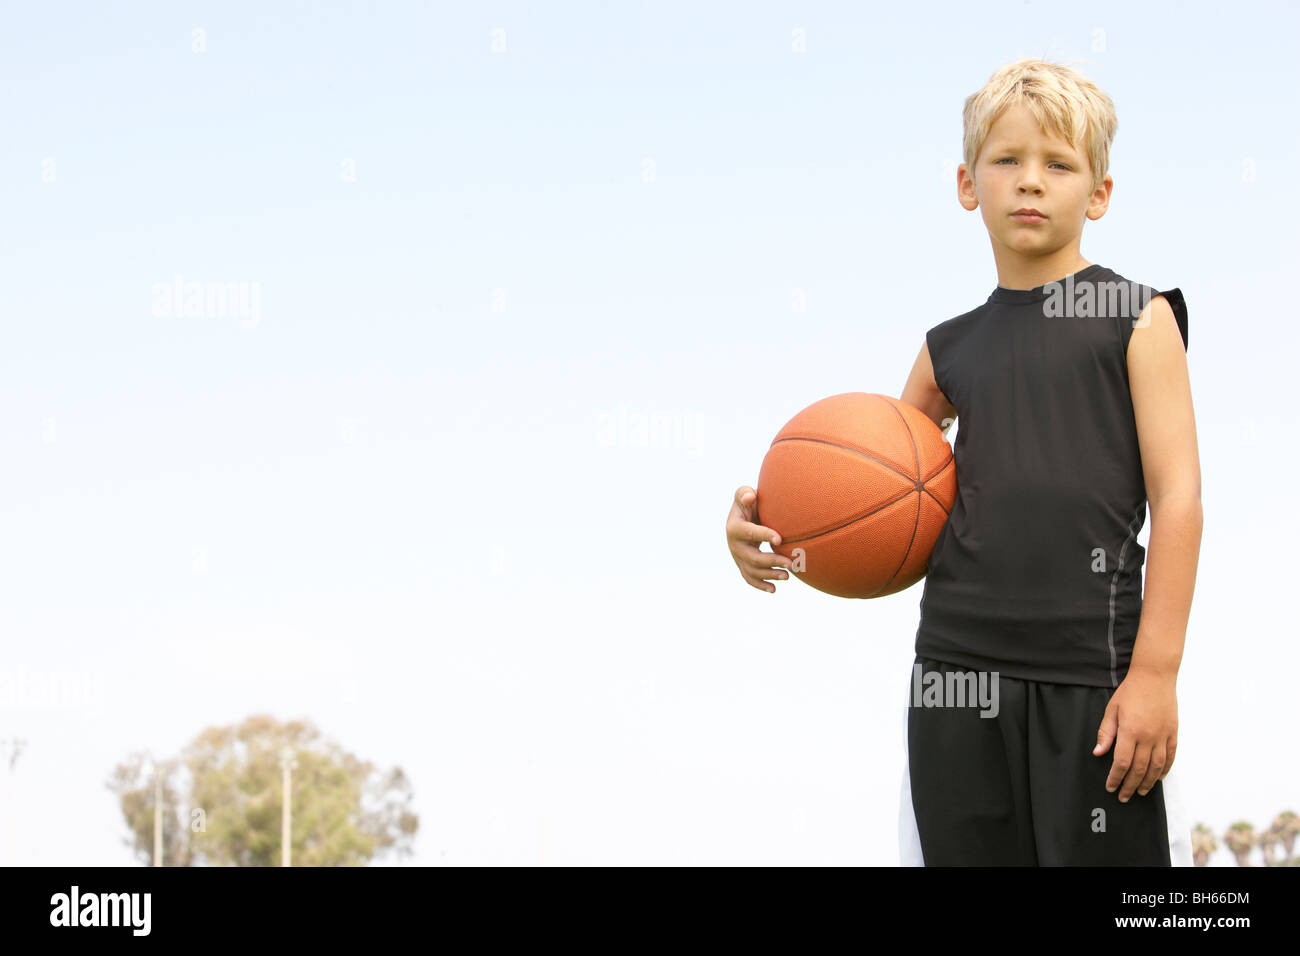 Young Boy Playing Basketball Stock Photo